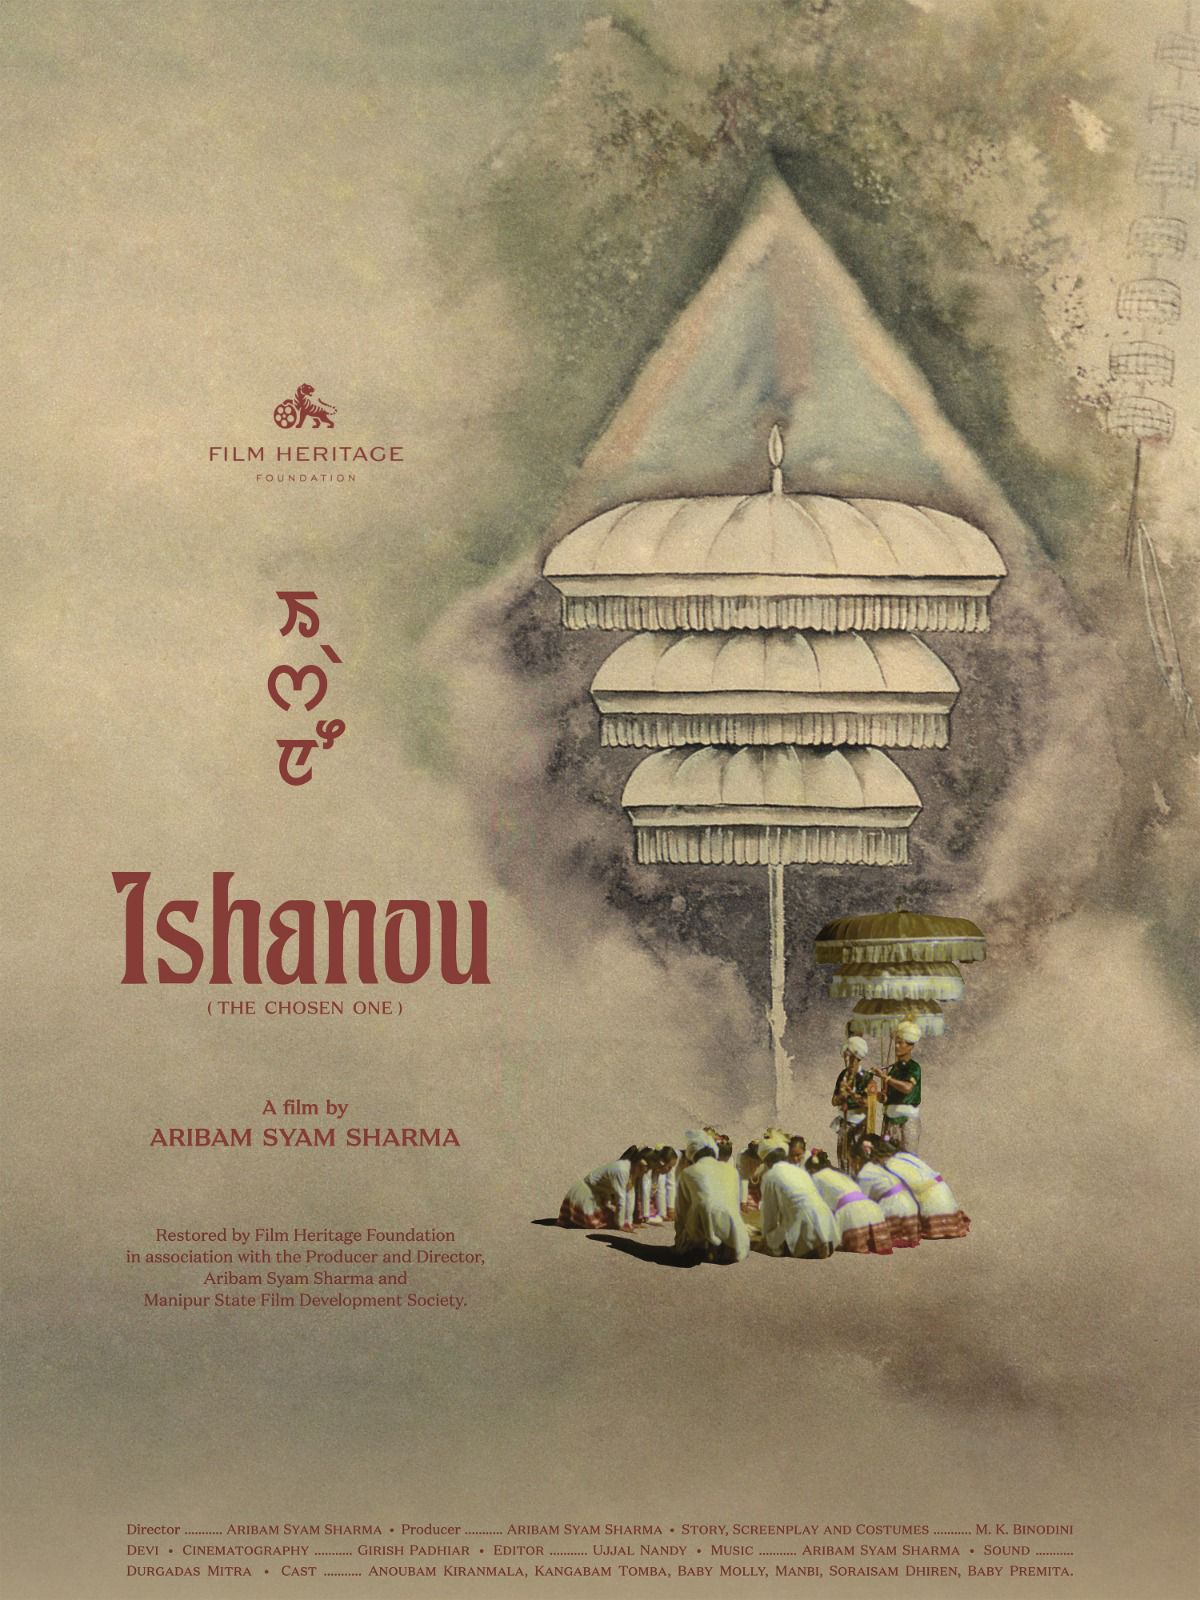 Maestro of Manipuri Cinema Aribam Syam Sharma's movie "Ishanou" poster